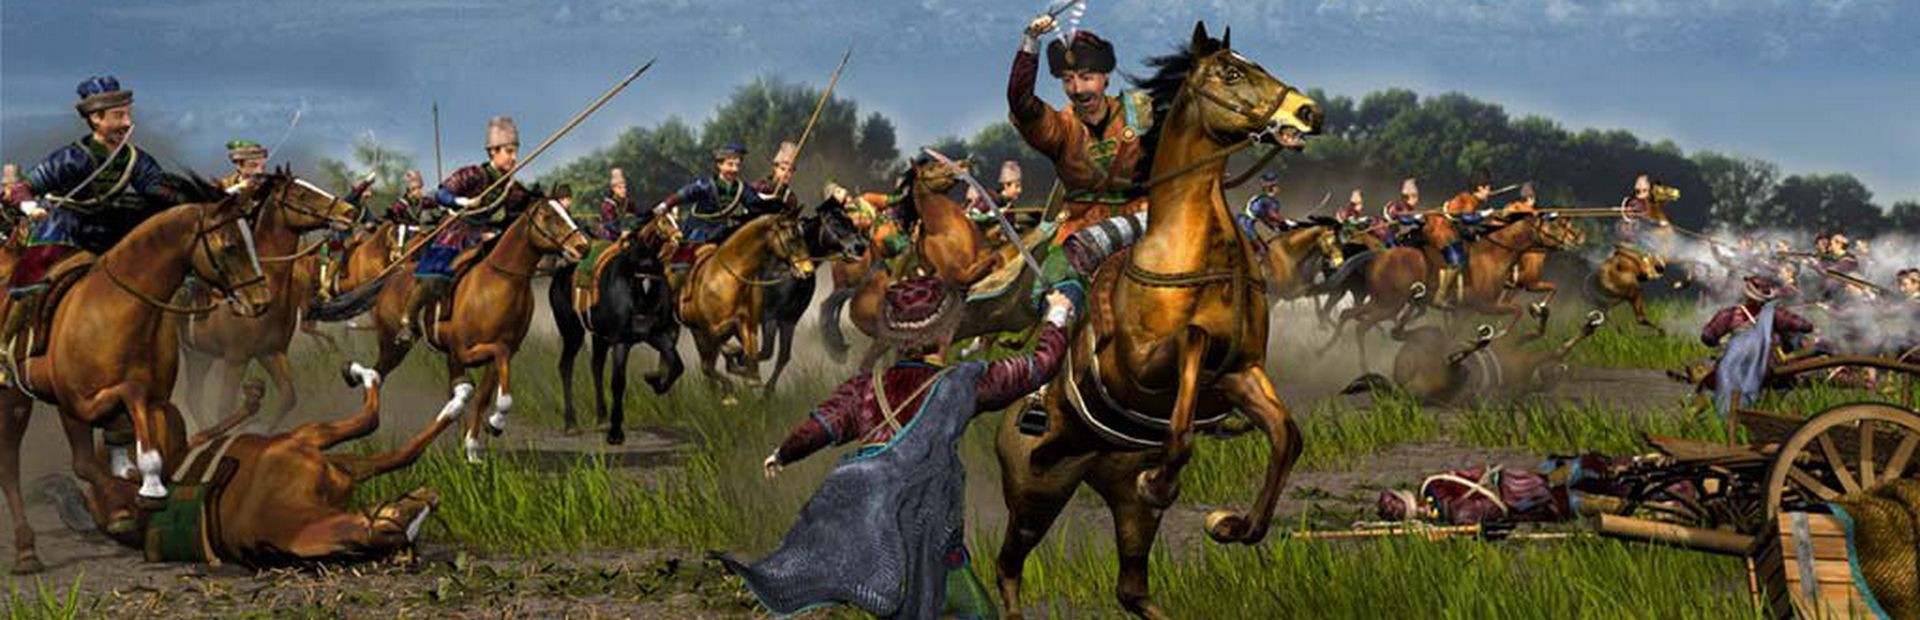 Cossacks: Art of War cover image